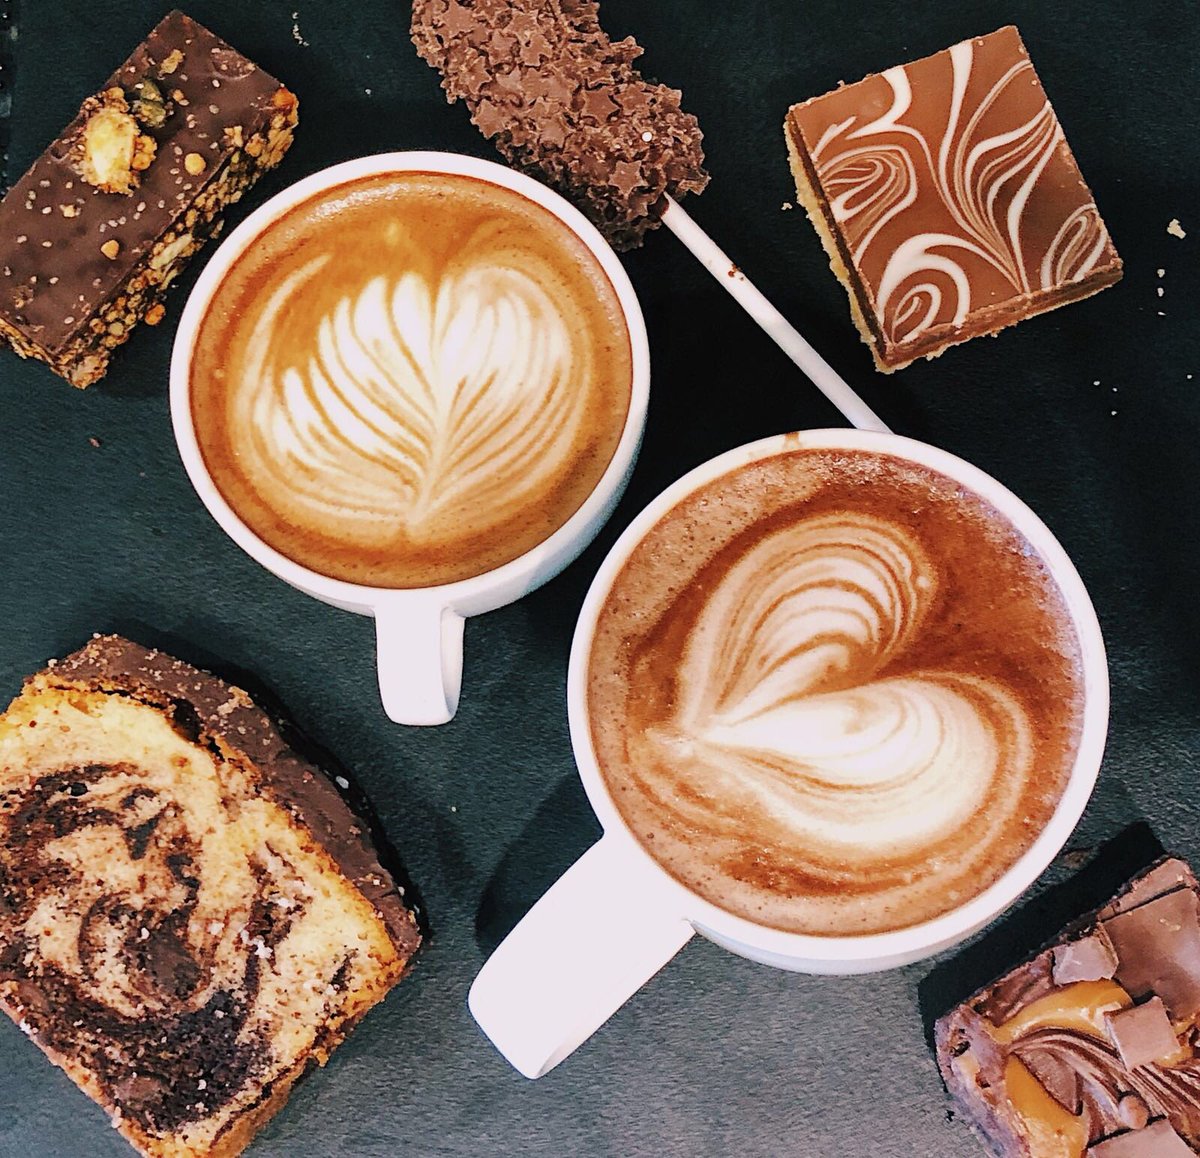 Hurray! It’s international chocolate day 🍫🍫🍫 Come indulge with us (we won’t tell anyone). #York #ConeyStreet #LatteArt #LatteArtHeroes #Chocolate #Espresso #InternationalChocolateDay